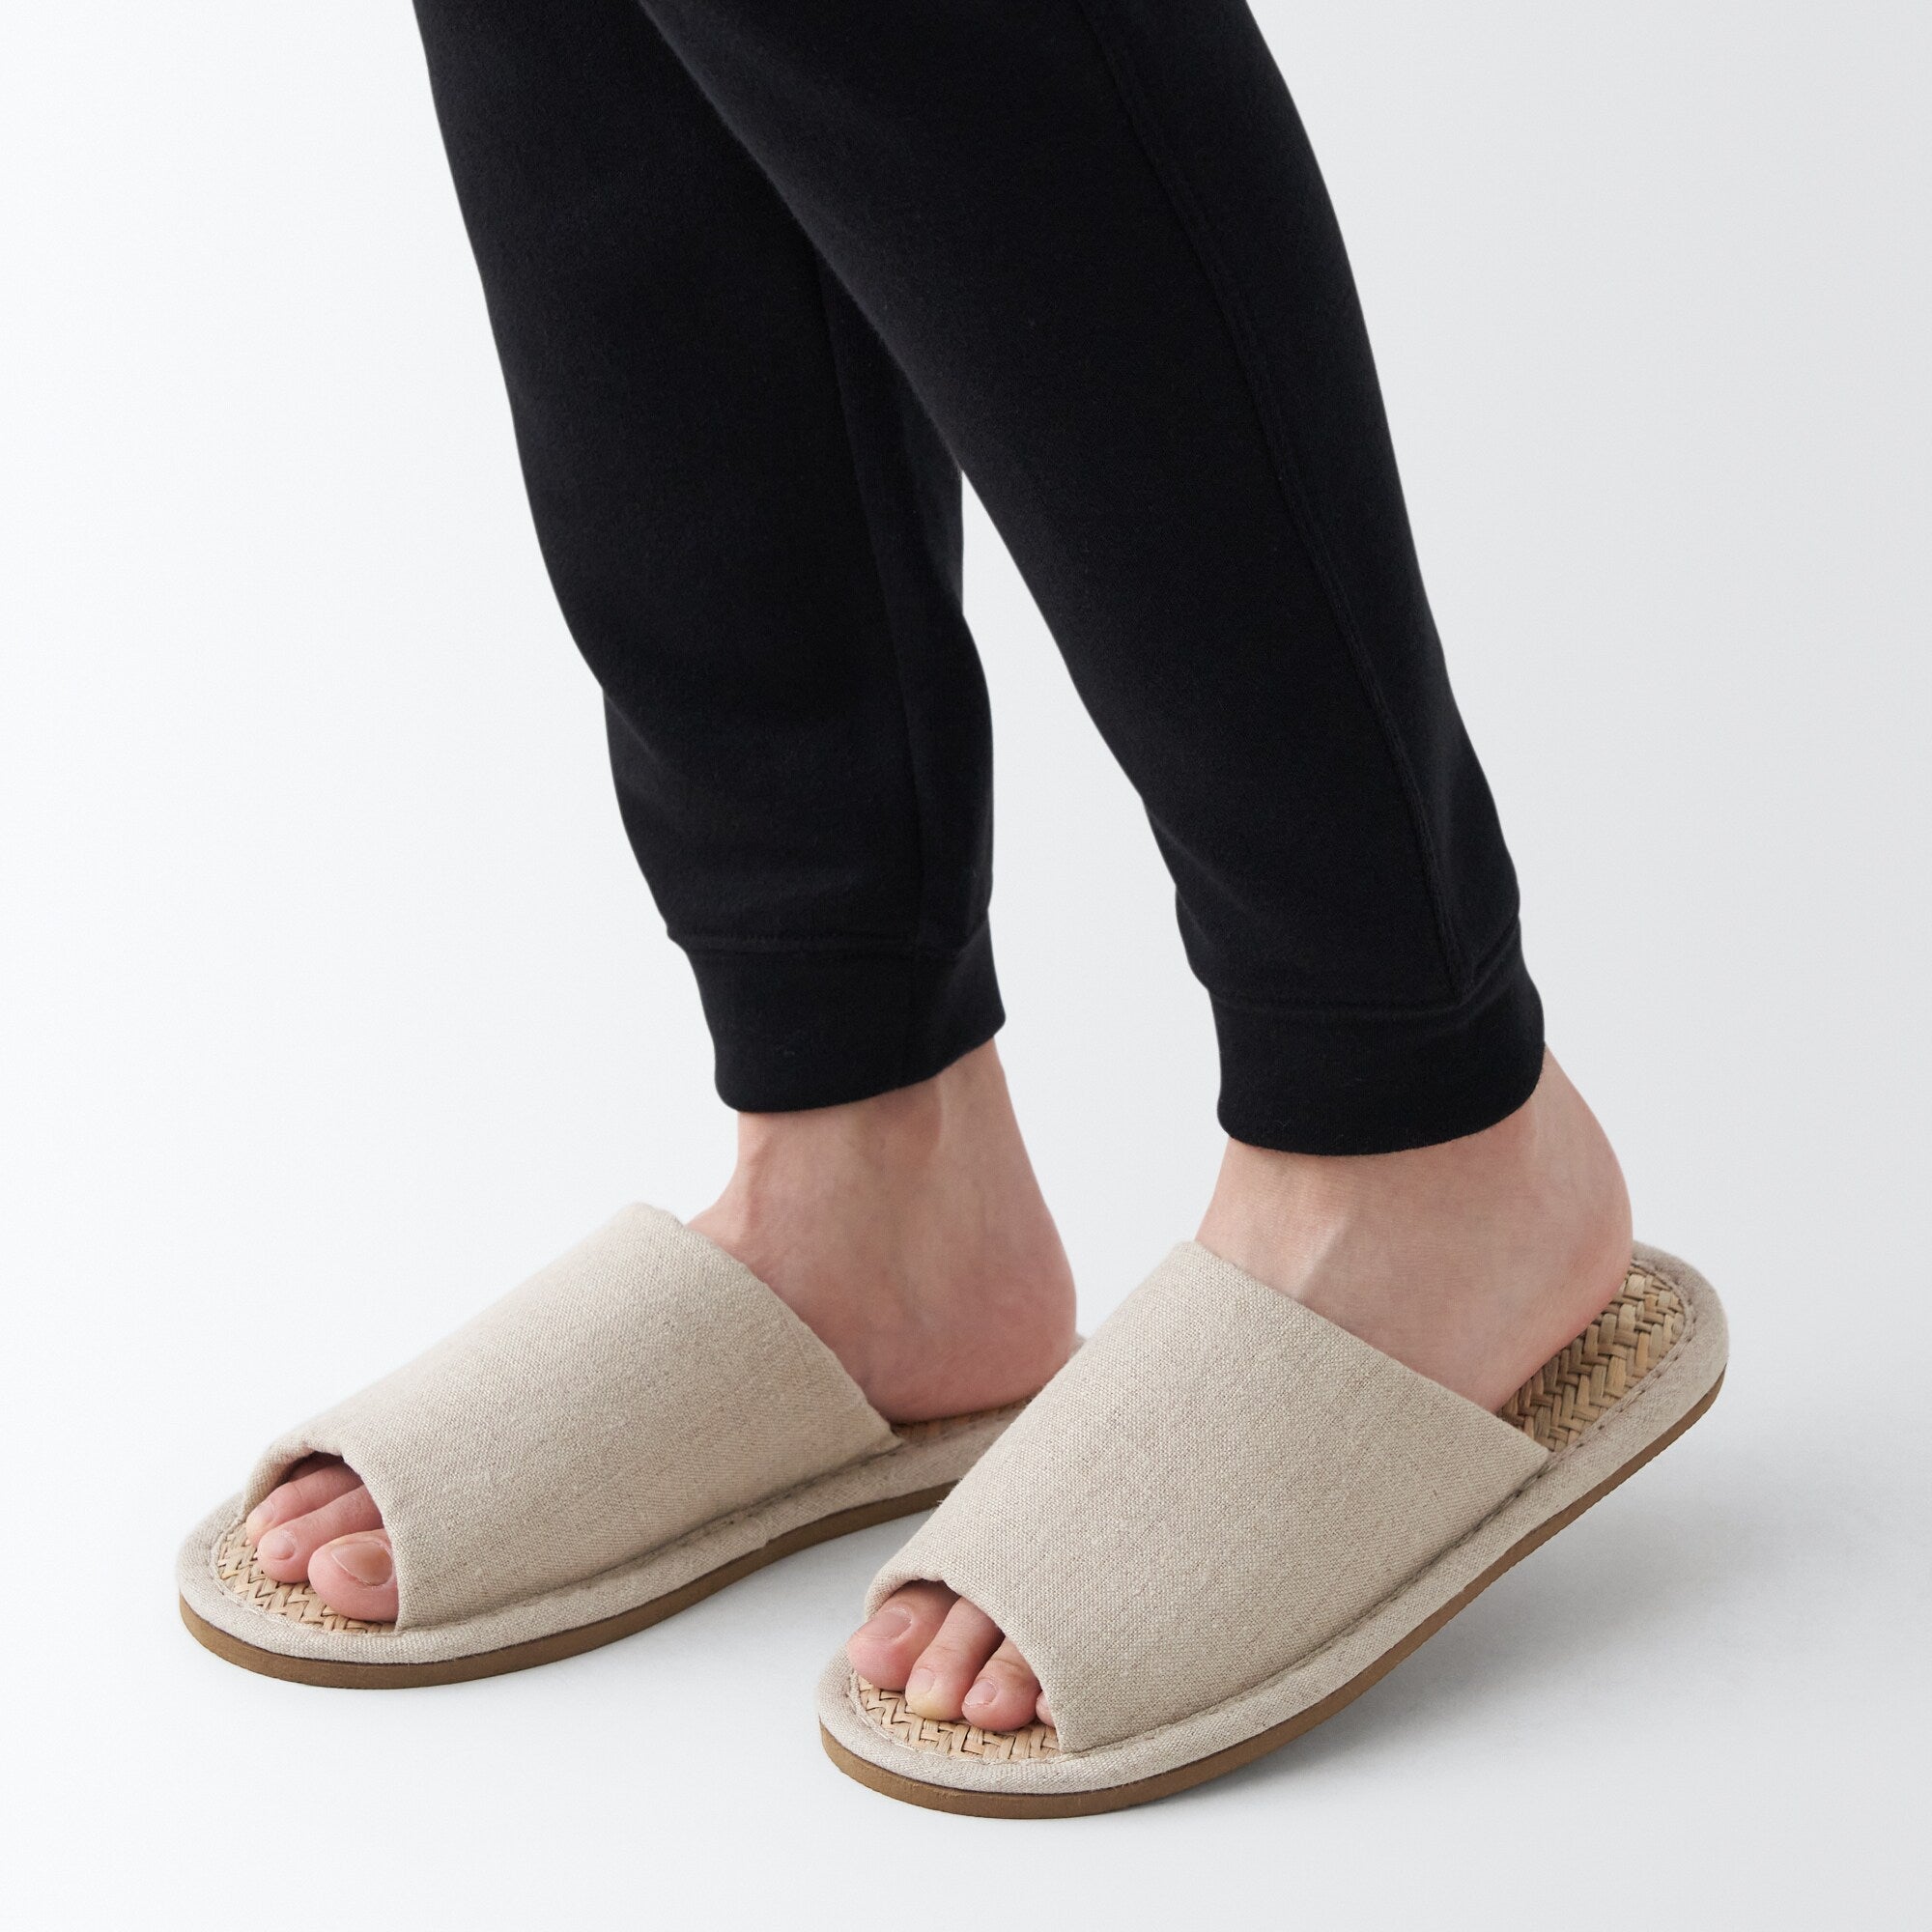 Slippers, Home Loungewear